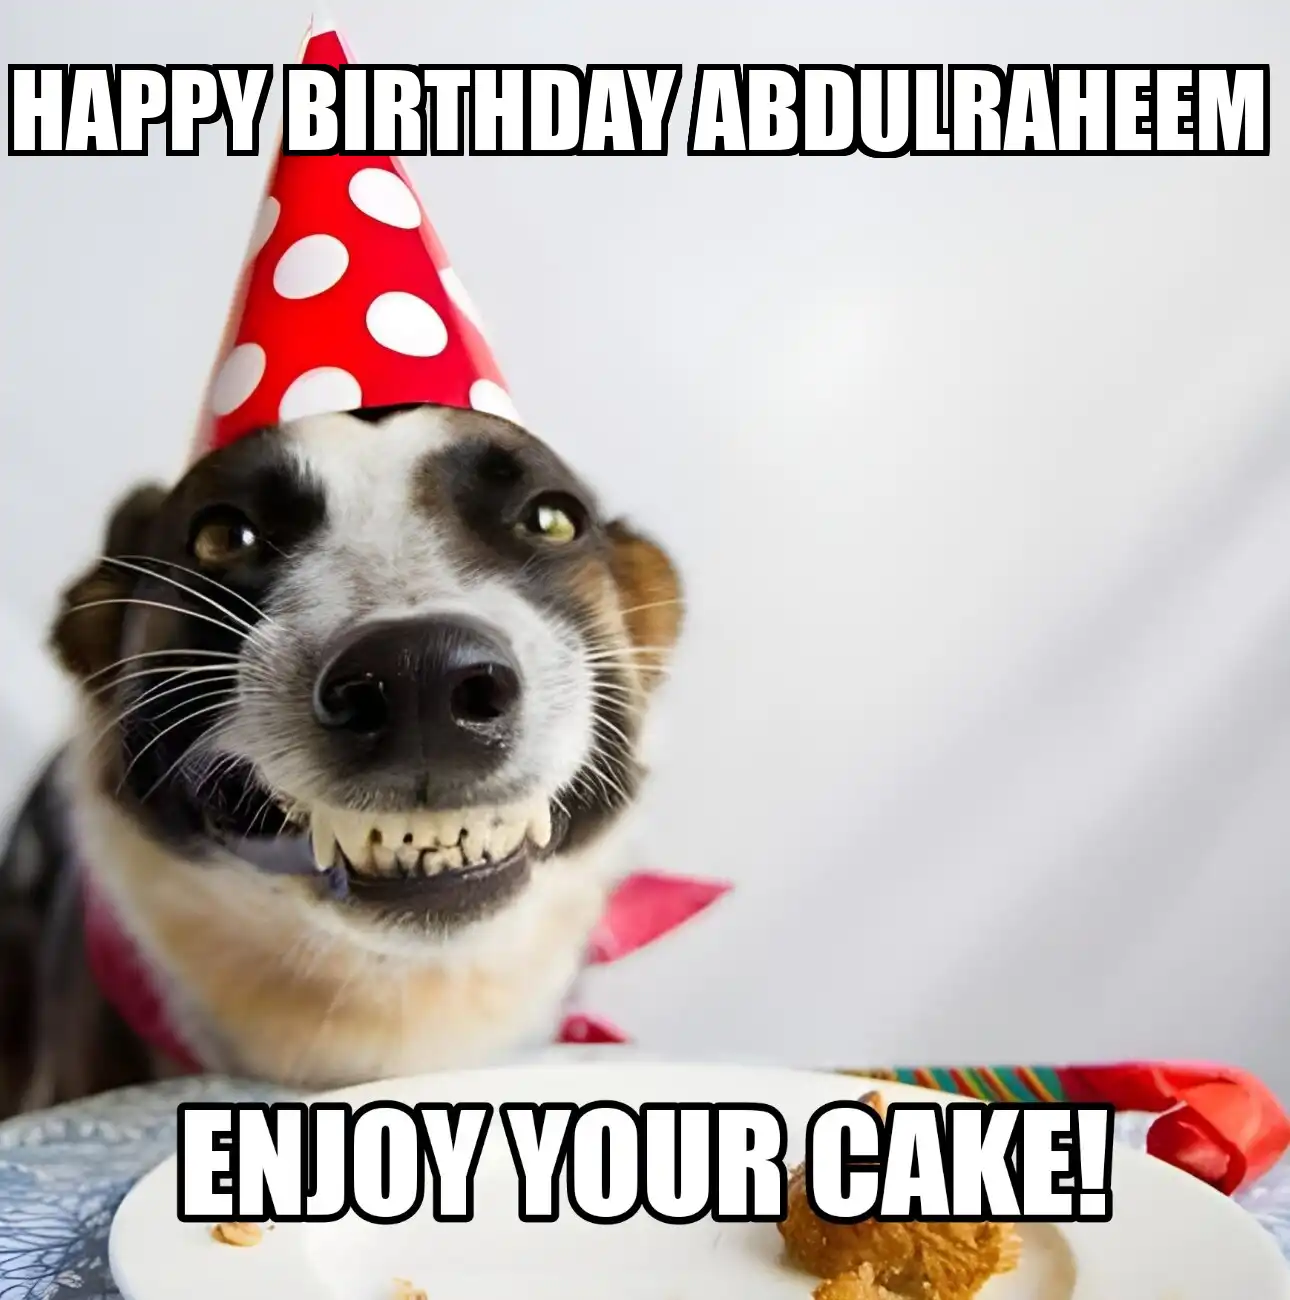 Happy Birthday Abdulraheem Enjoy Your Cake Dog Meme